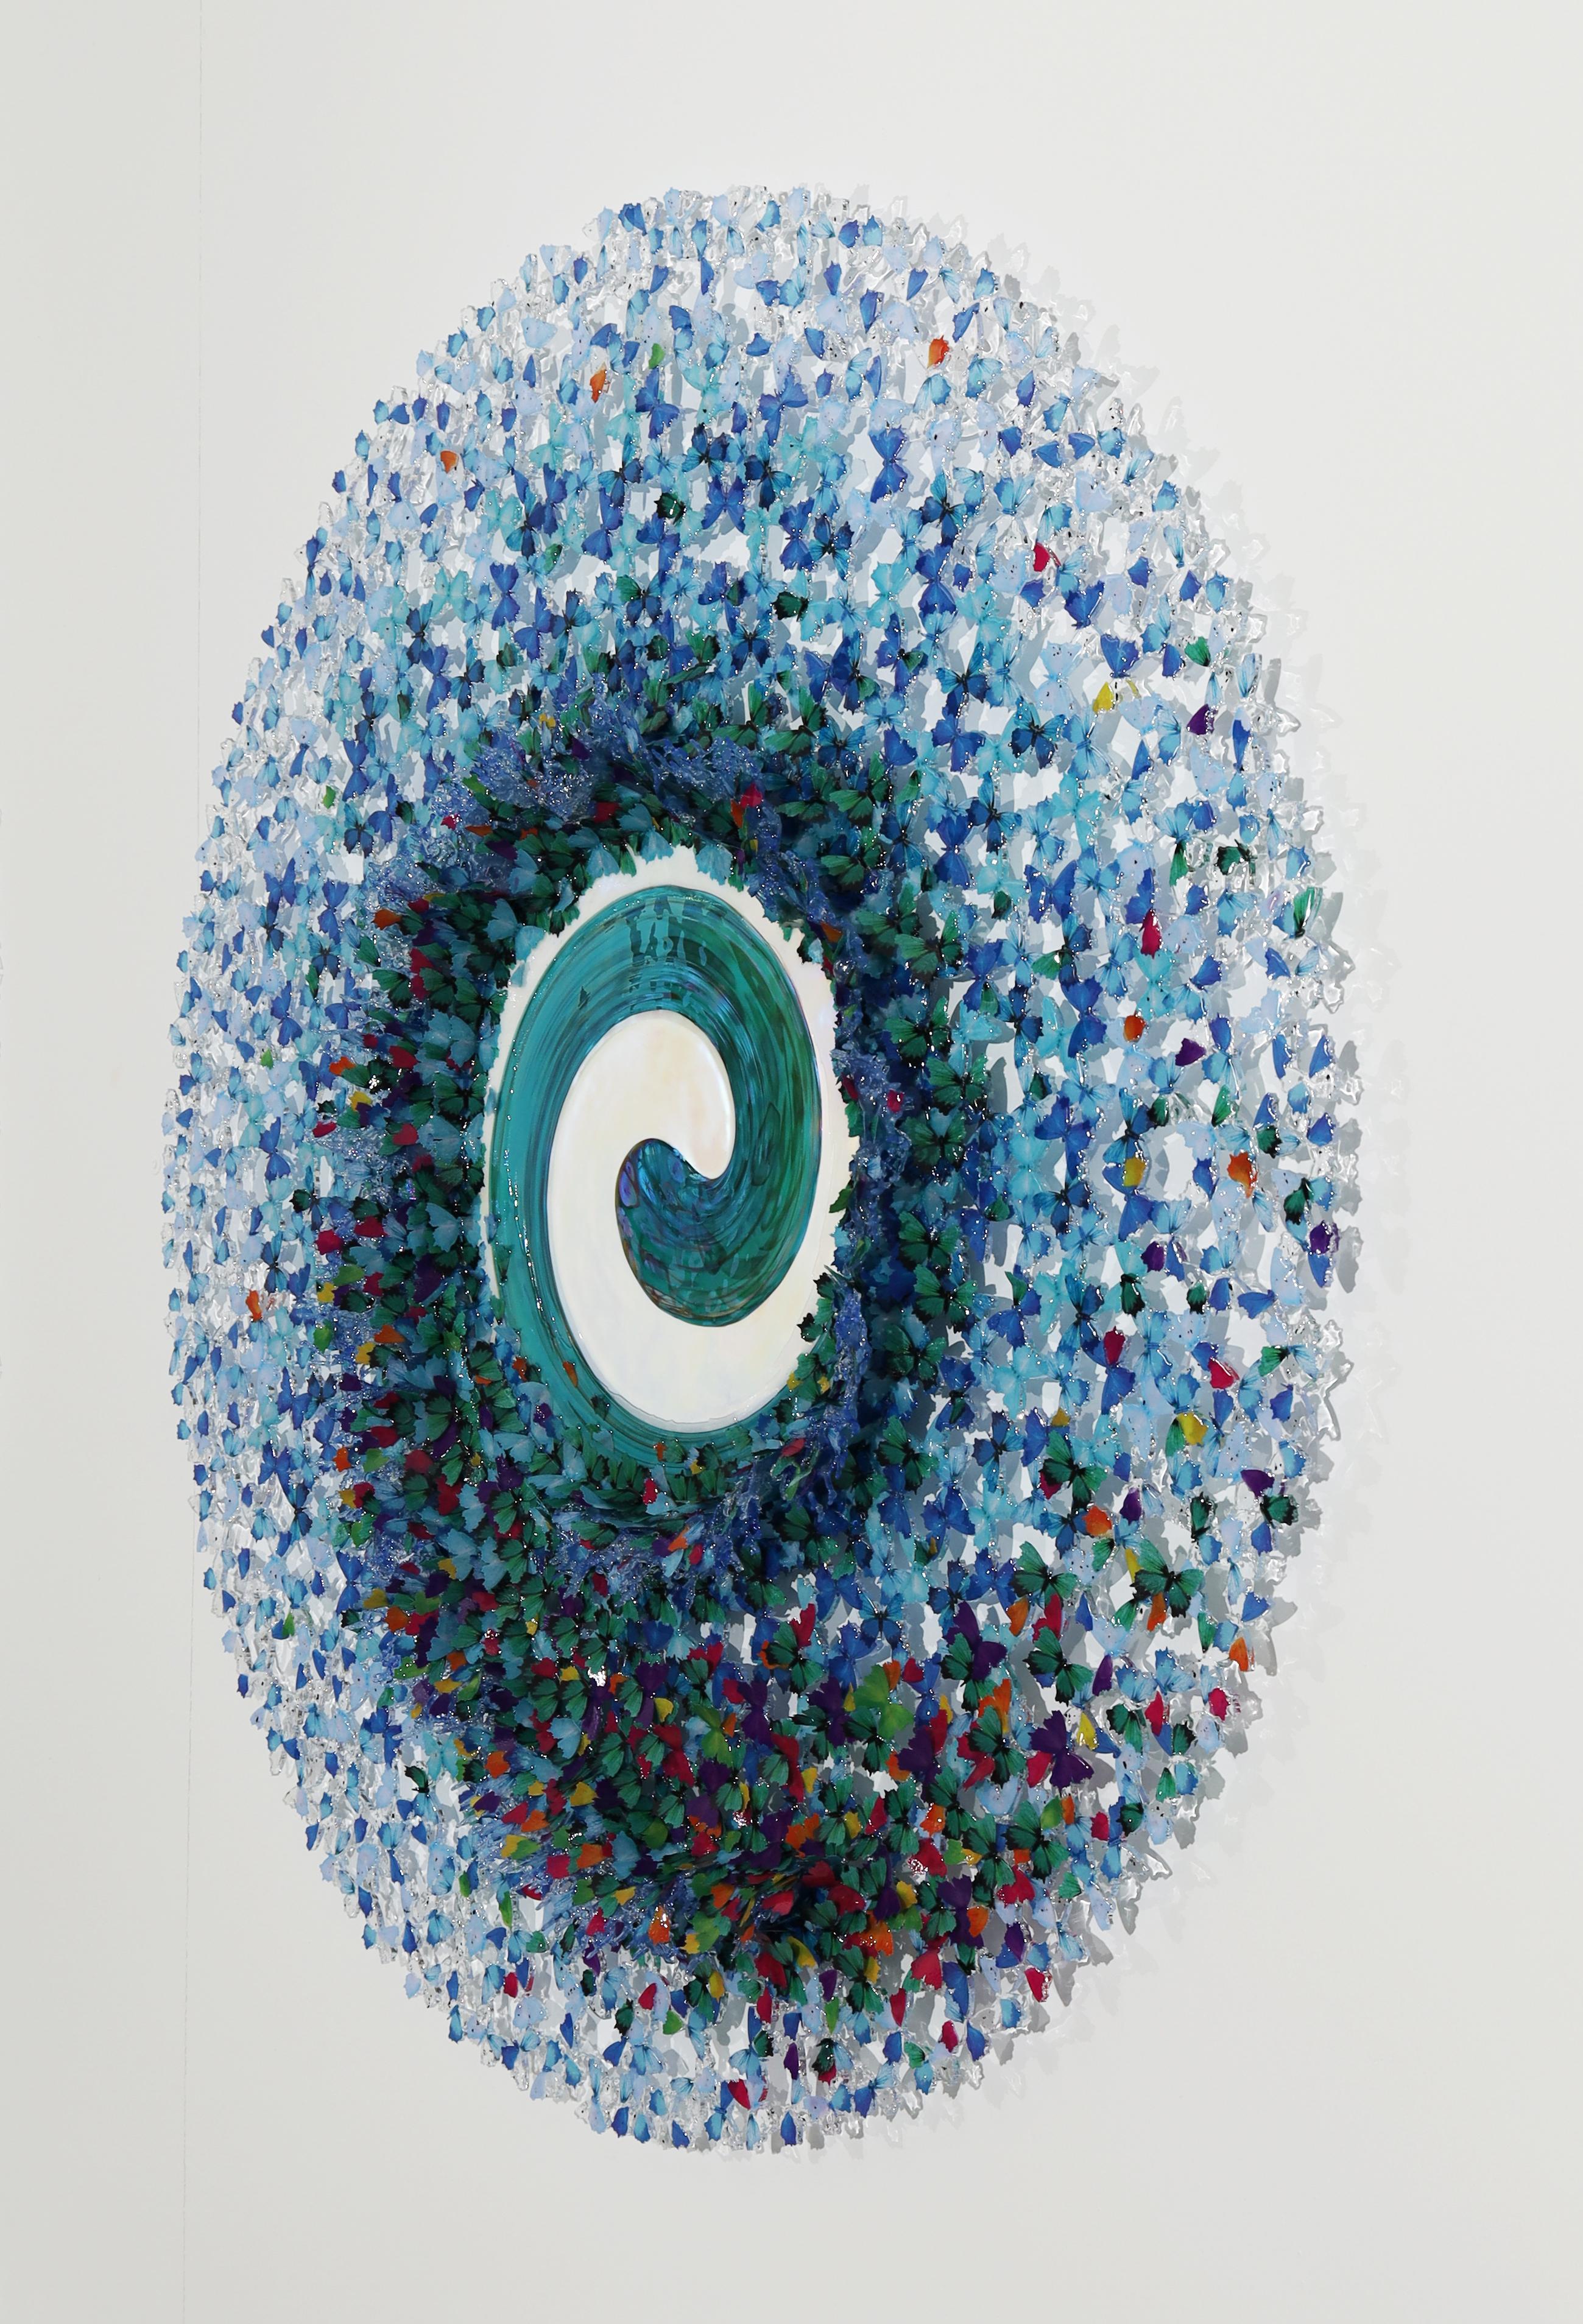 Dreamcatcher Spiral of Tales 180 cm - Contemporary Sculpture by Annalù